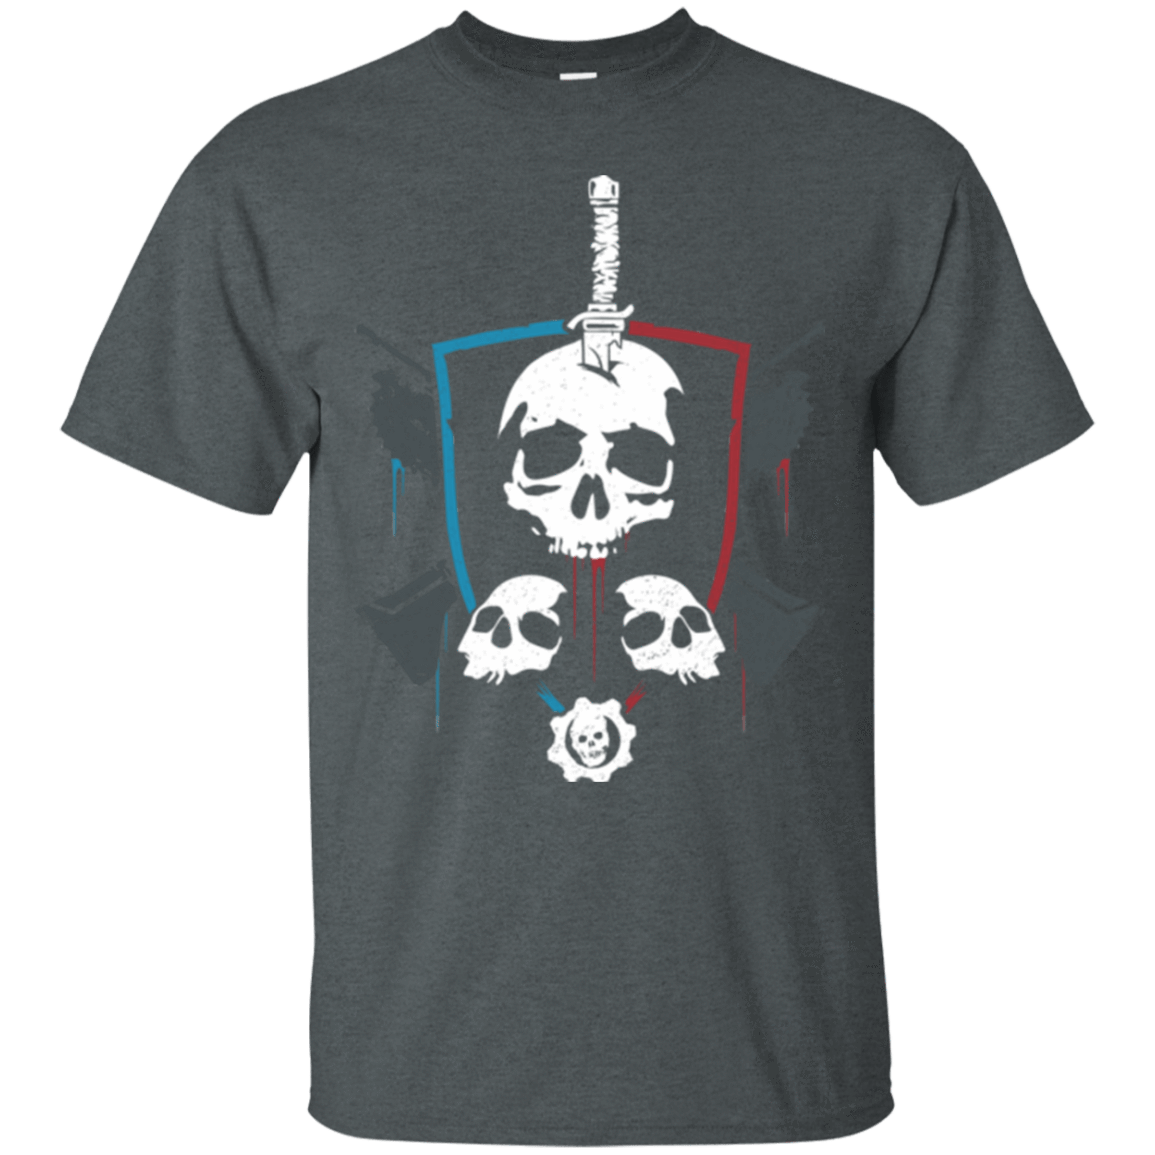 T-Shirts Dark Heather / Small Gears of War 4 Crest T-Shirt